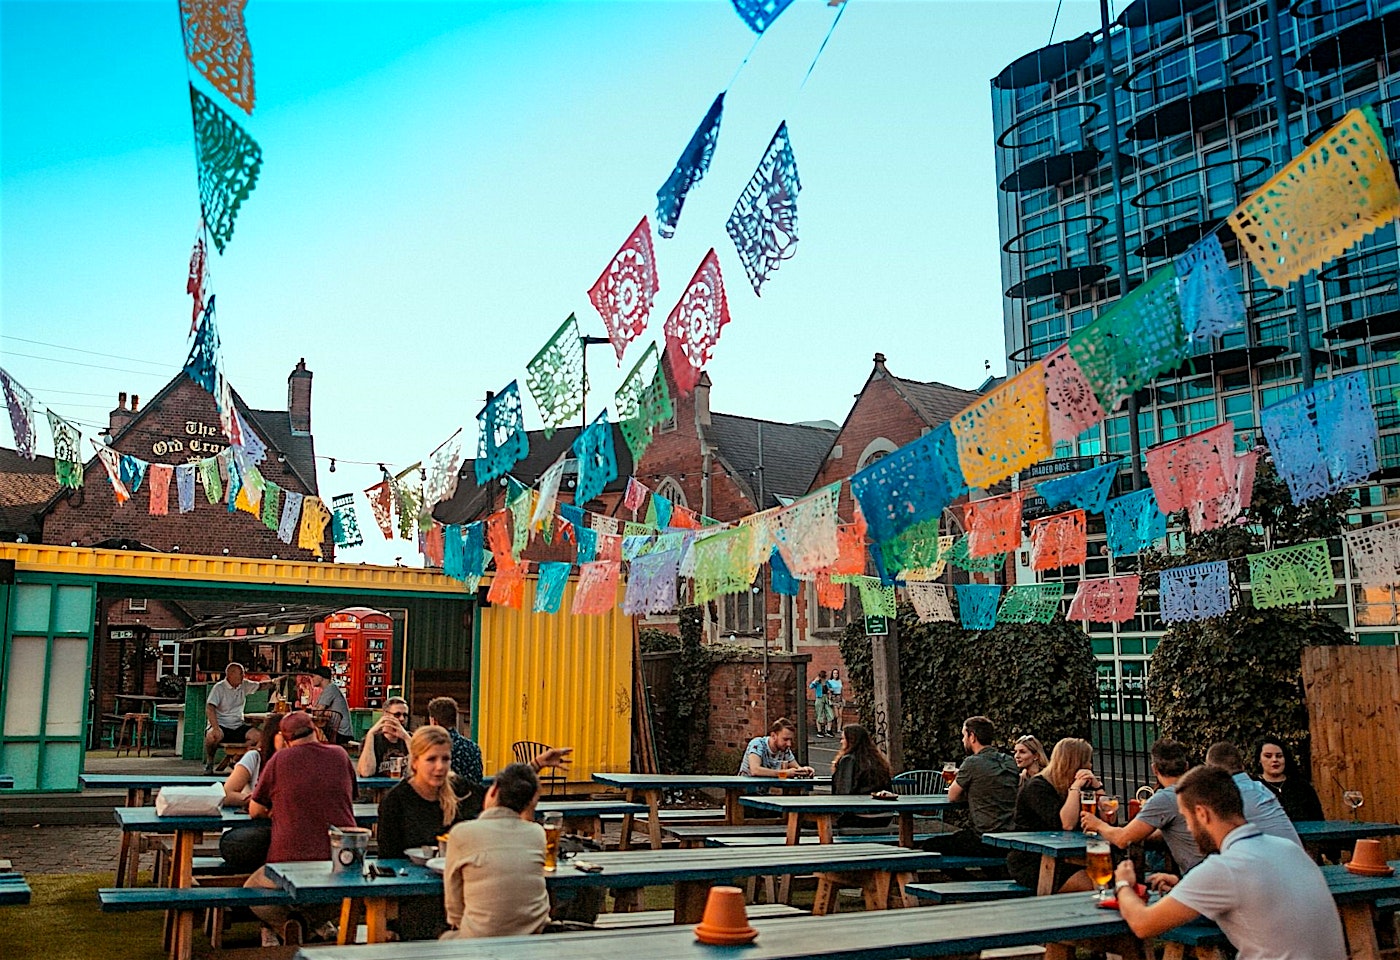 The Old Crown, outdoor bar in Birmingham